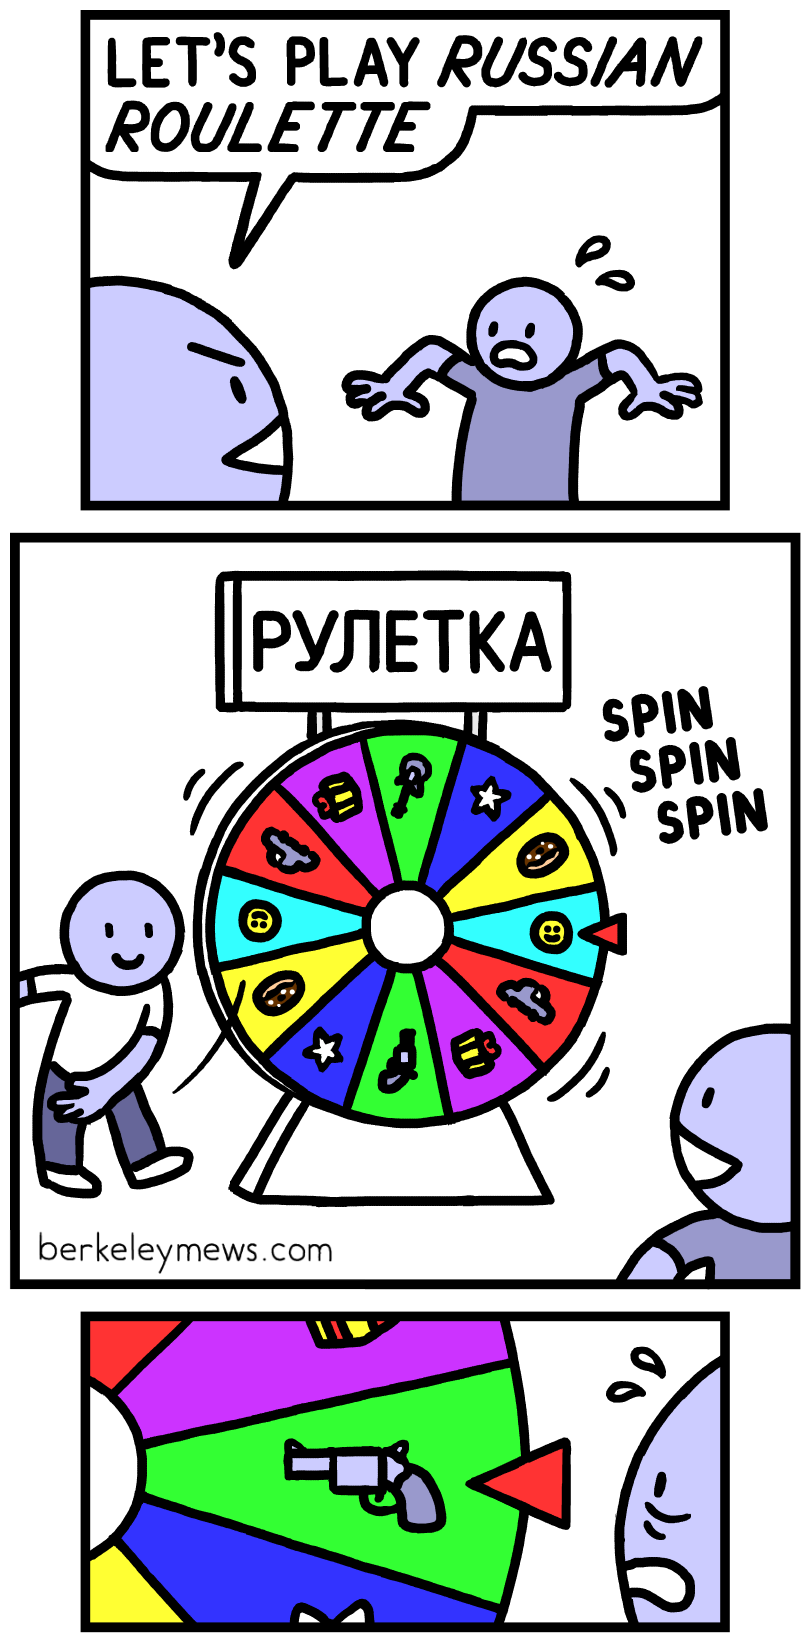 Russian Roulette